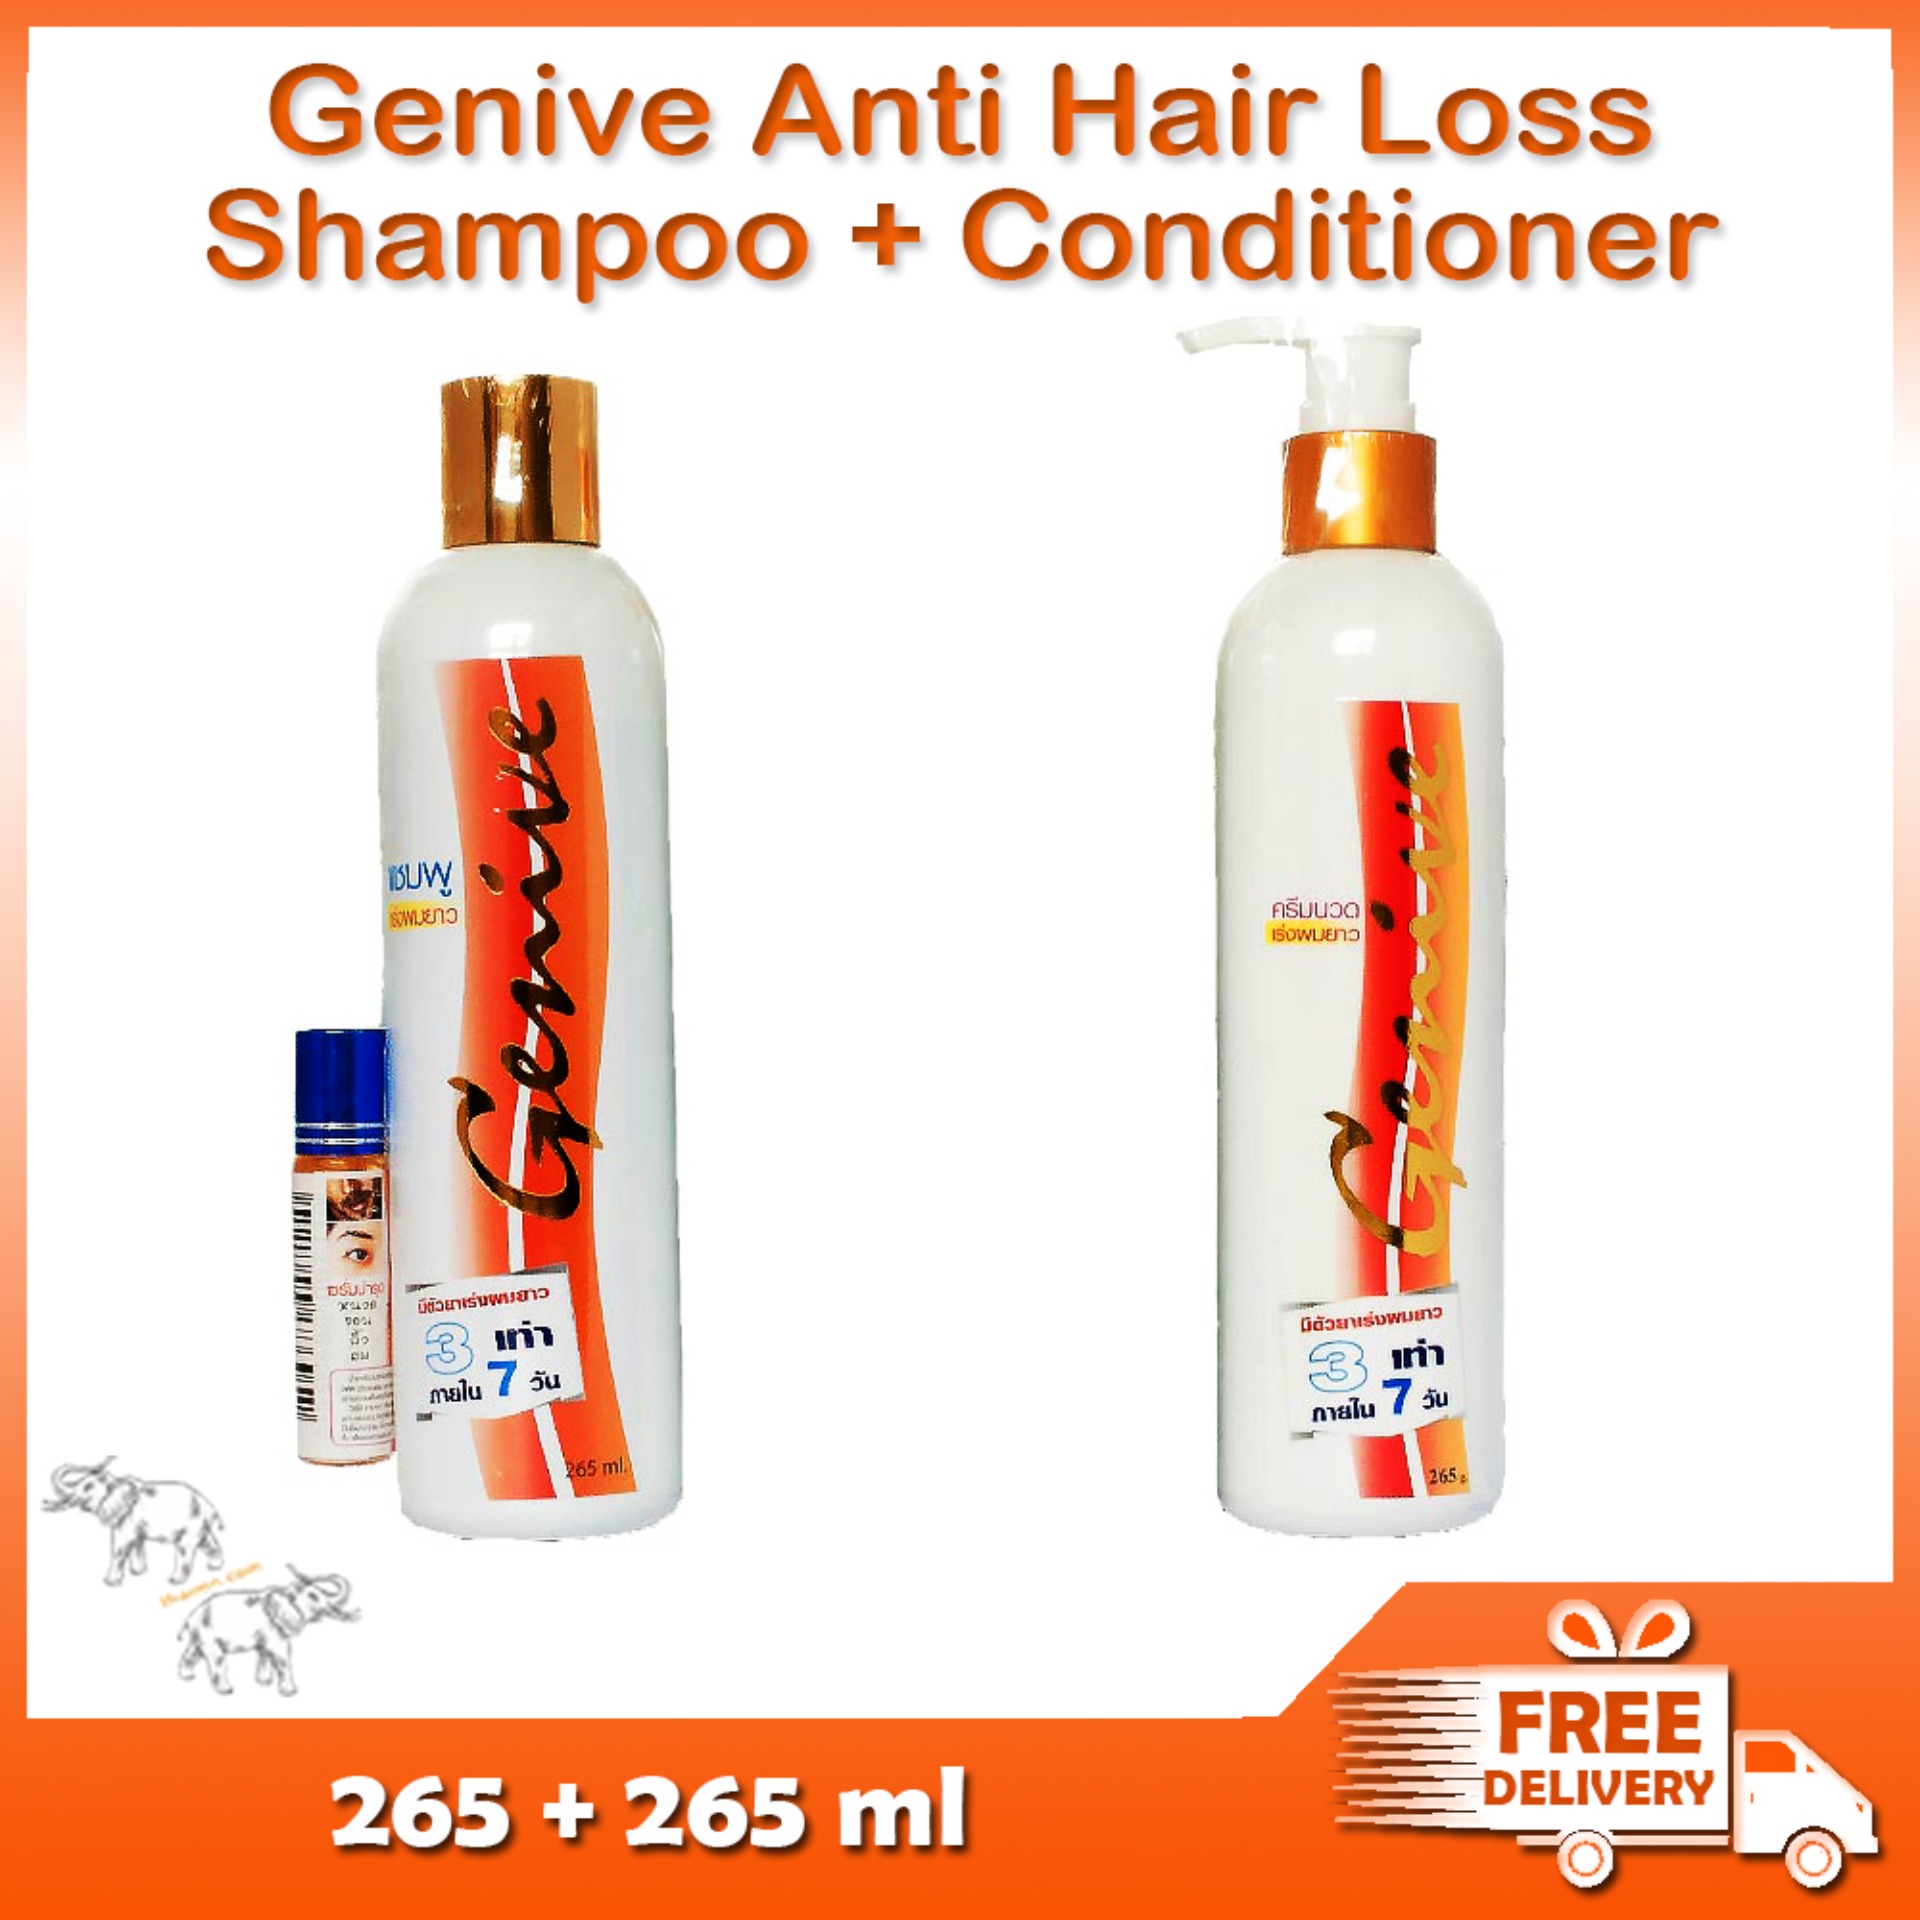 Genive SET  Anti Hair Loss Shampoo - เจนีเว่ ป้องกัน ผมบาง แชมพู แชมพูปลูกผม 265 ml + Anti Hair Loss and Grow Hair Conditioner เจนีเว่ ครีมนวด หยุดผมร่วง ปลูกผมใหม่ 265 ml